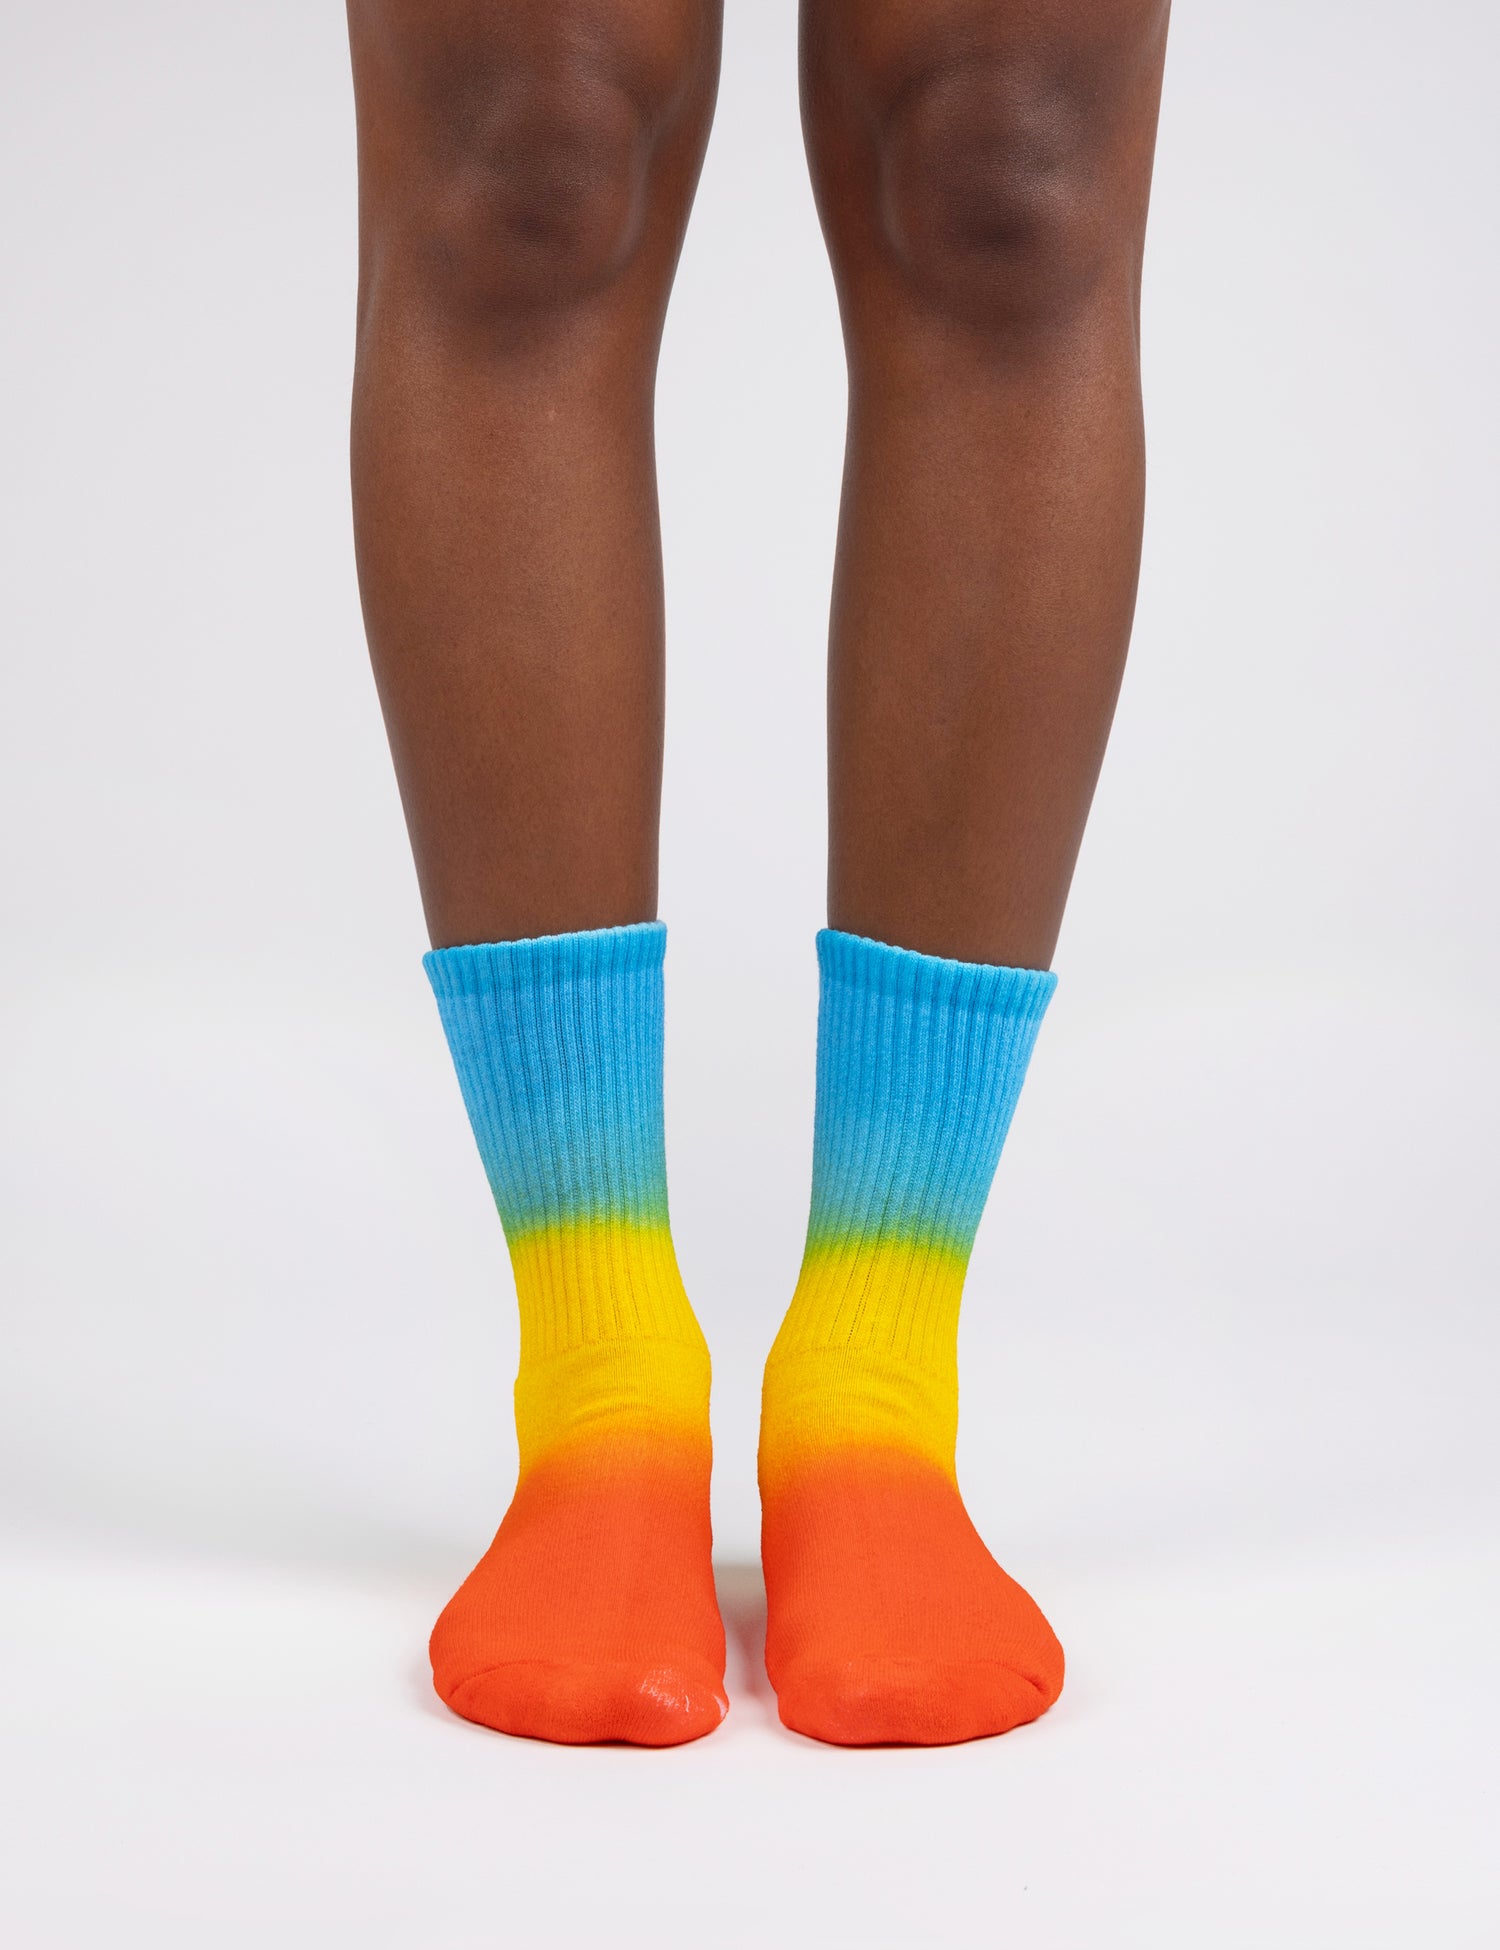 Image of feet wearing socks in gradient colors blue yellow orange